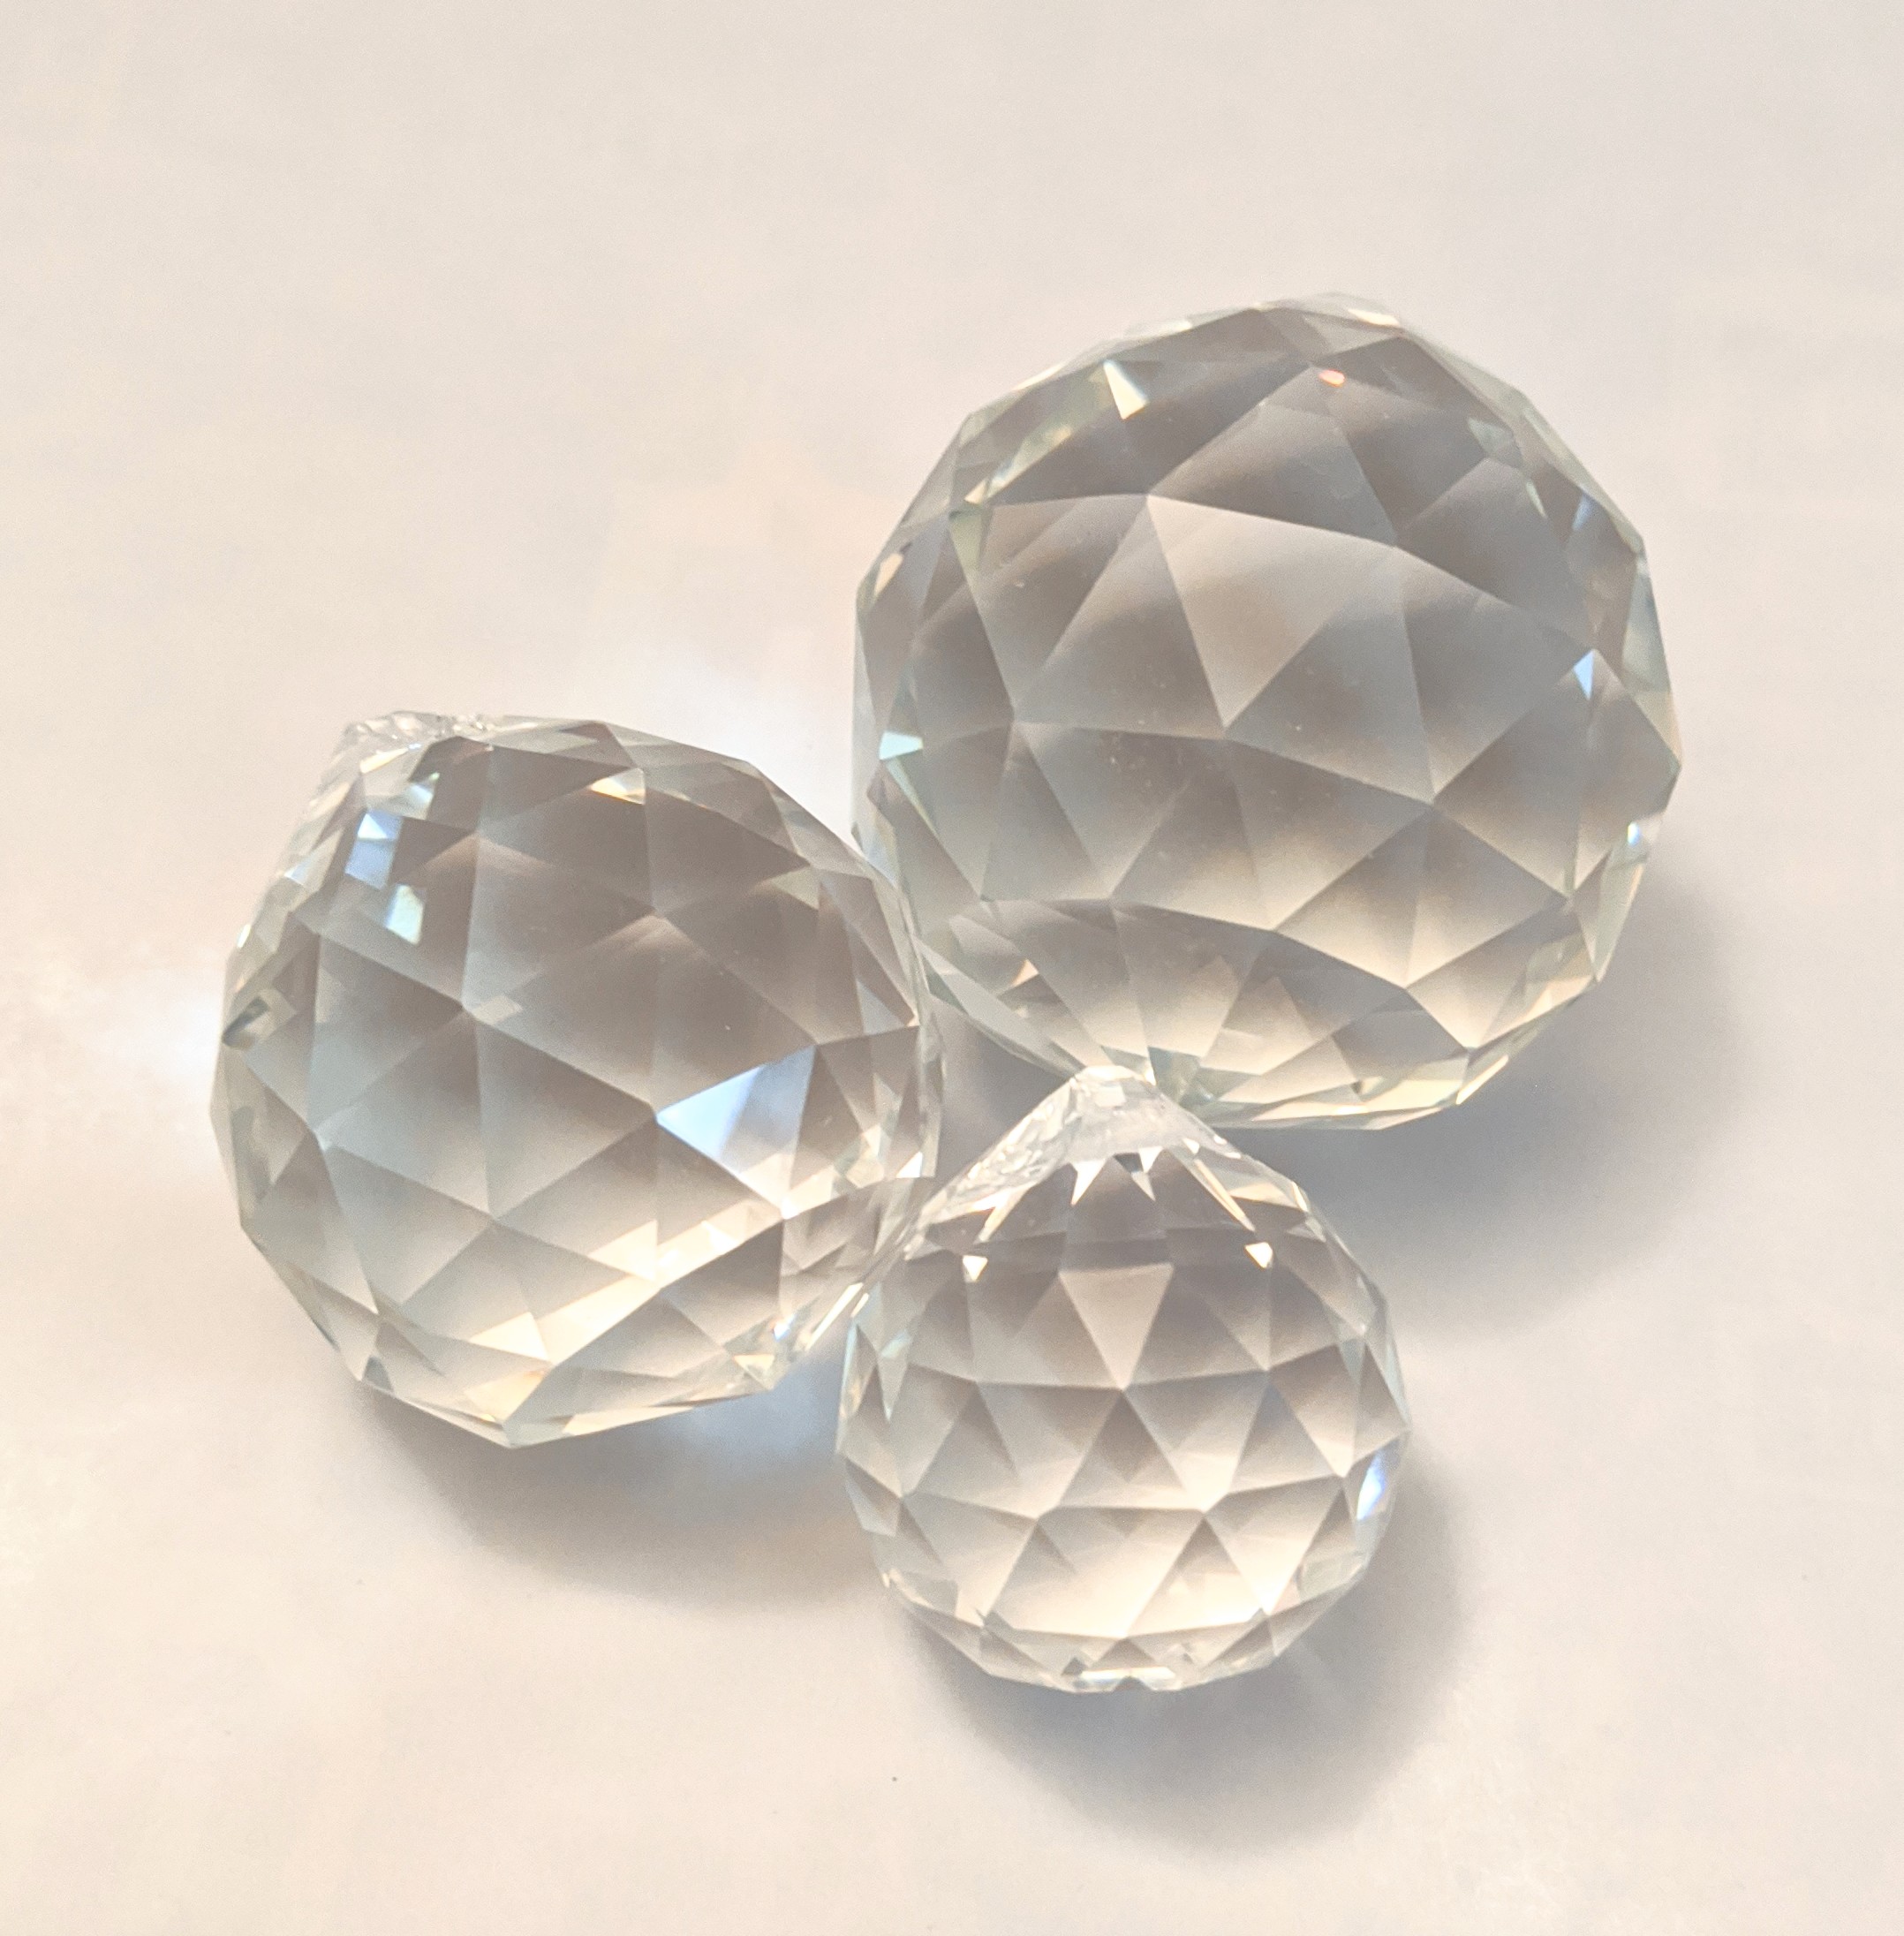 Beautiful Crystals!